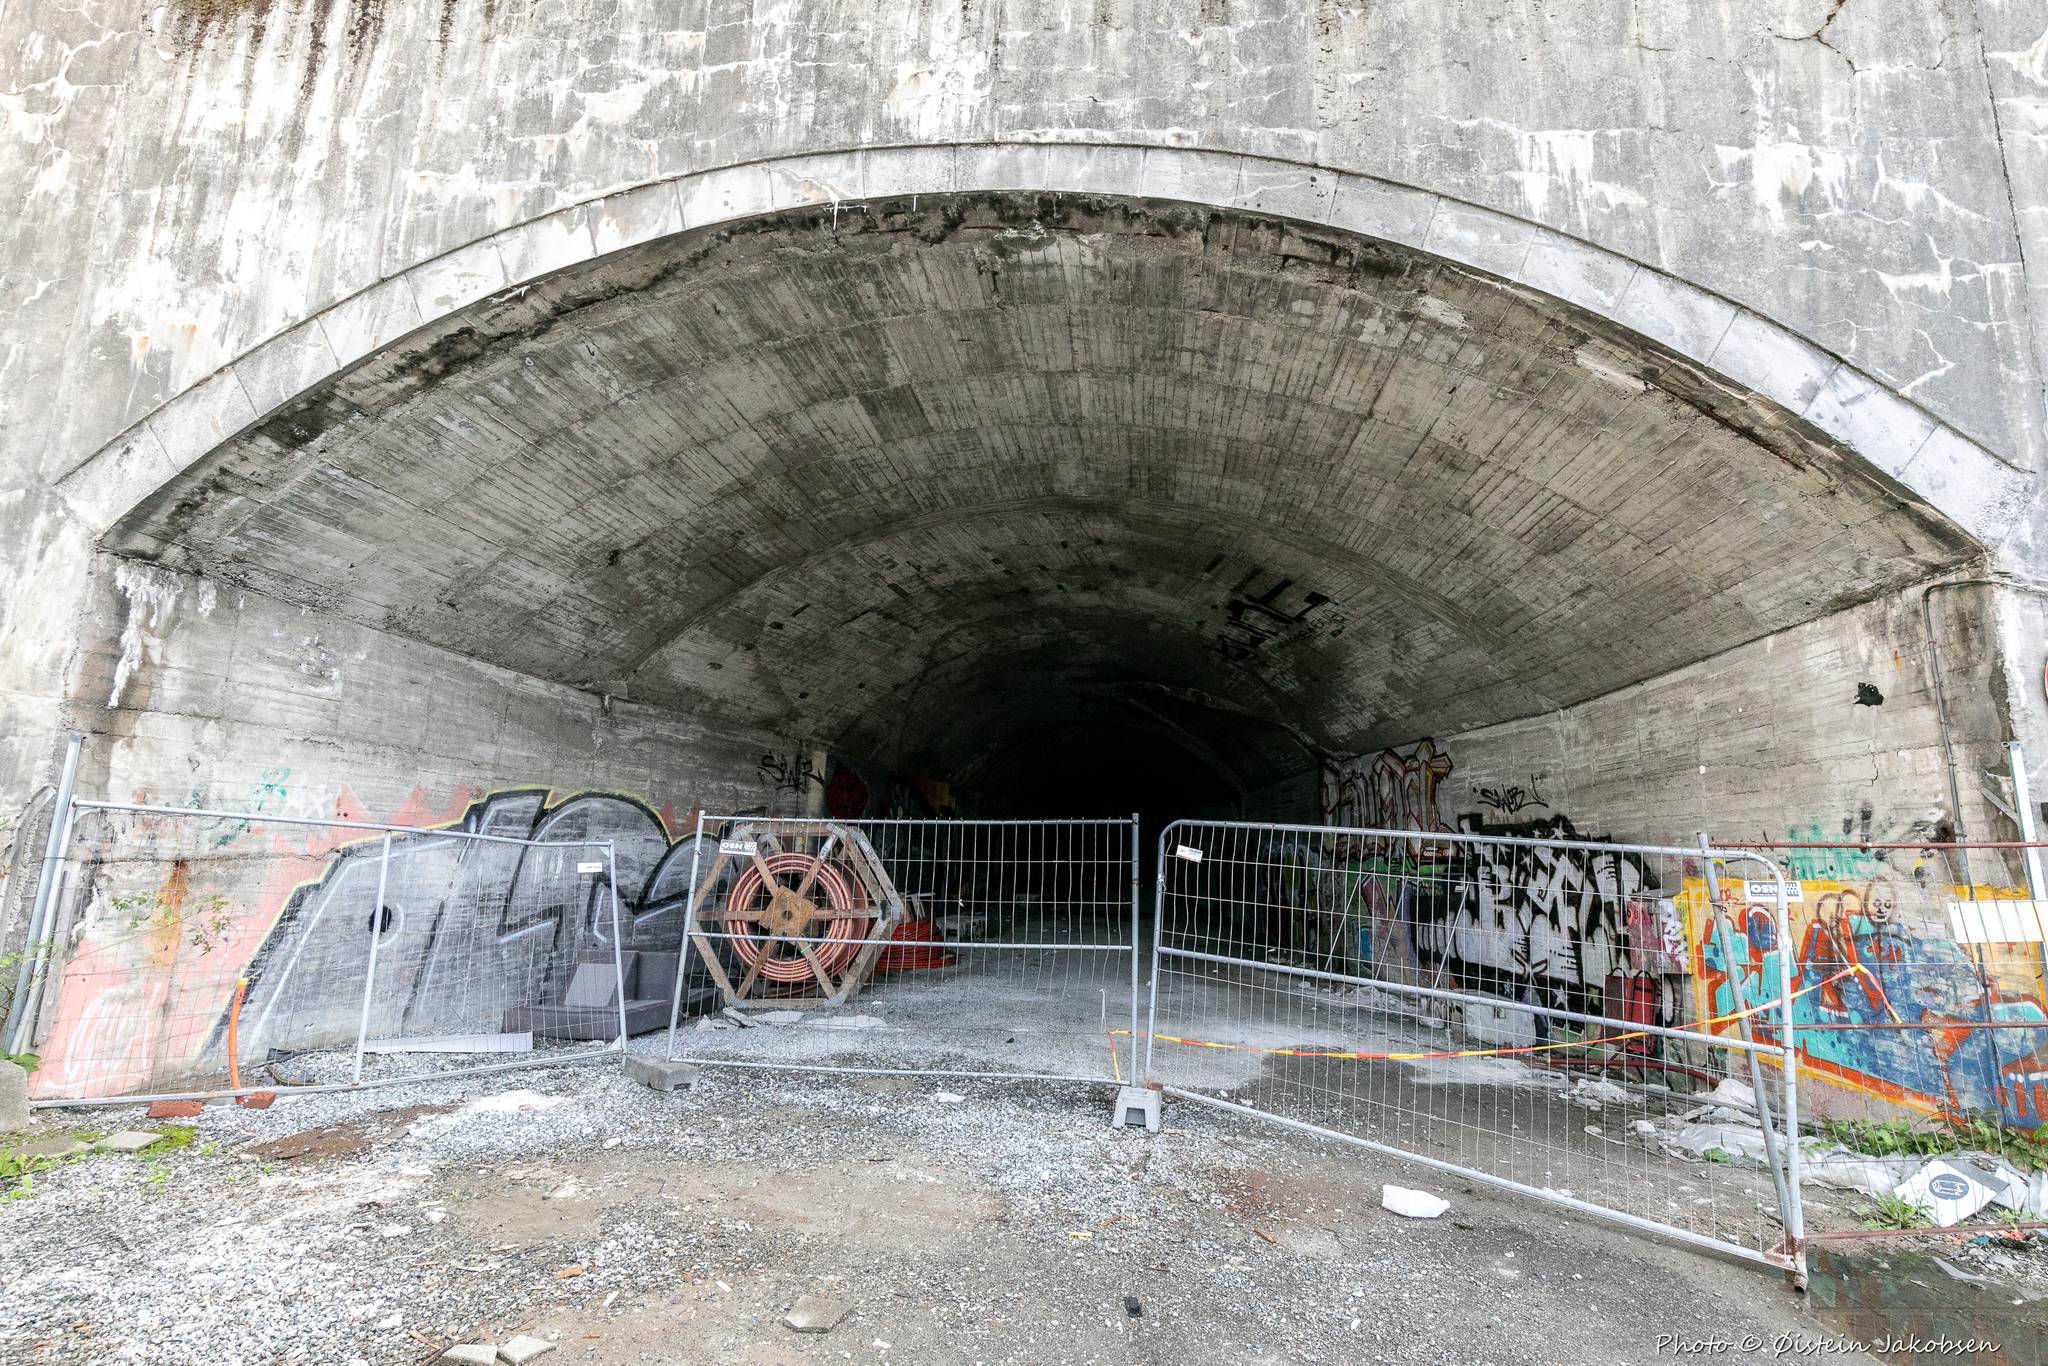 &mdash;The Tunnel at Møhlenpris